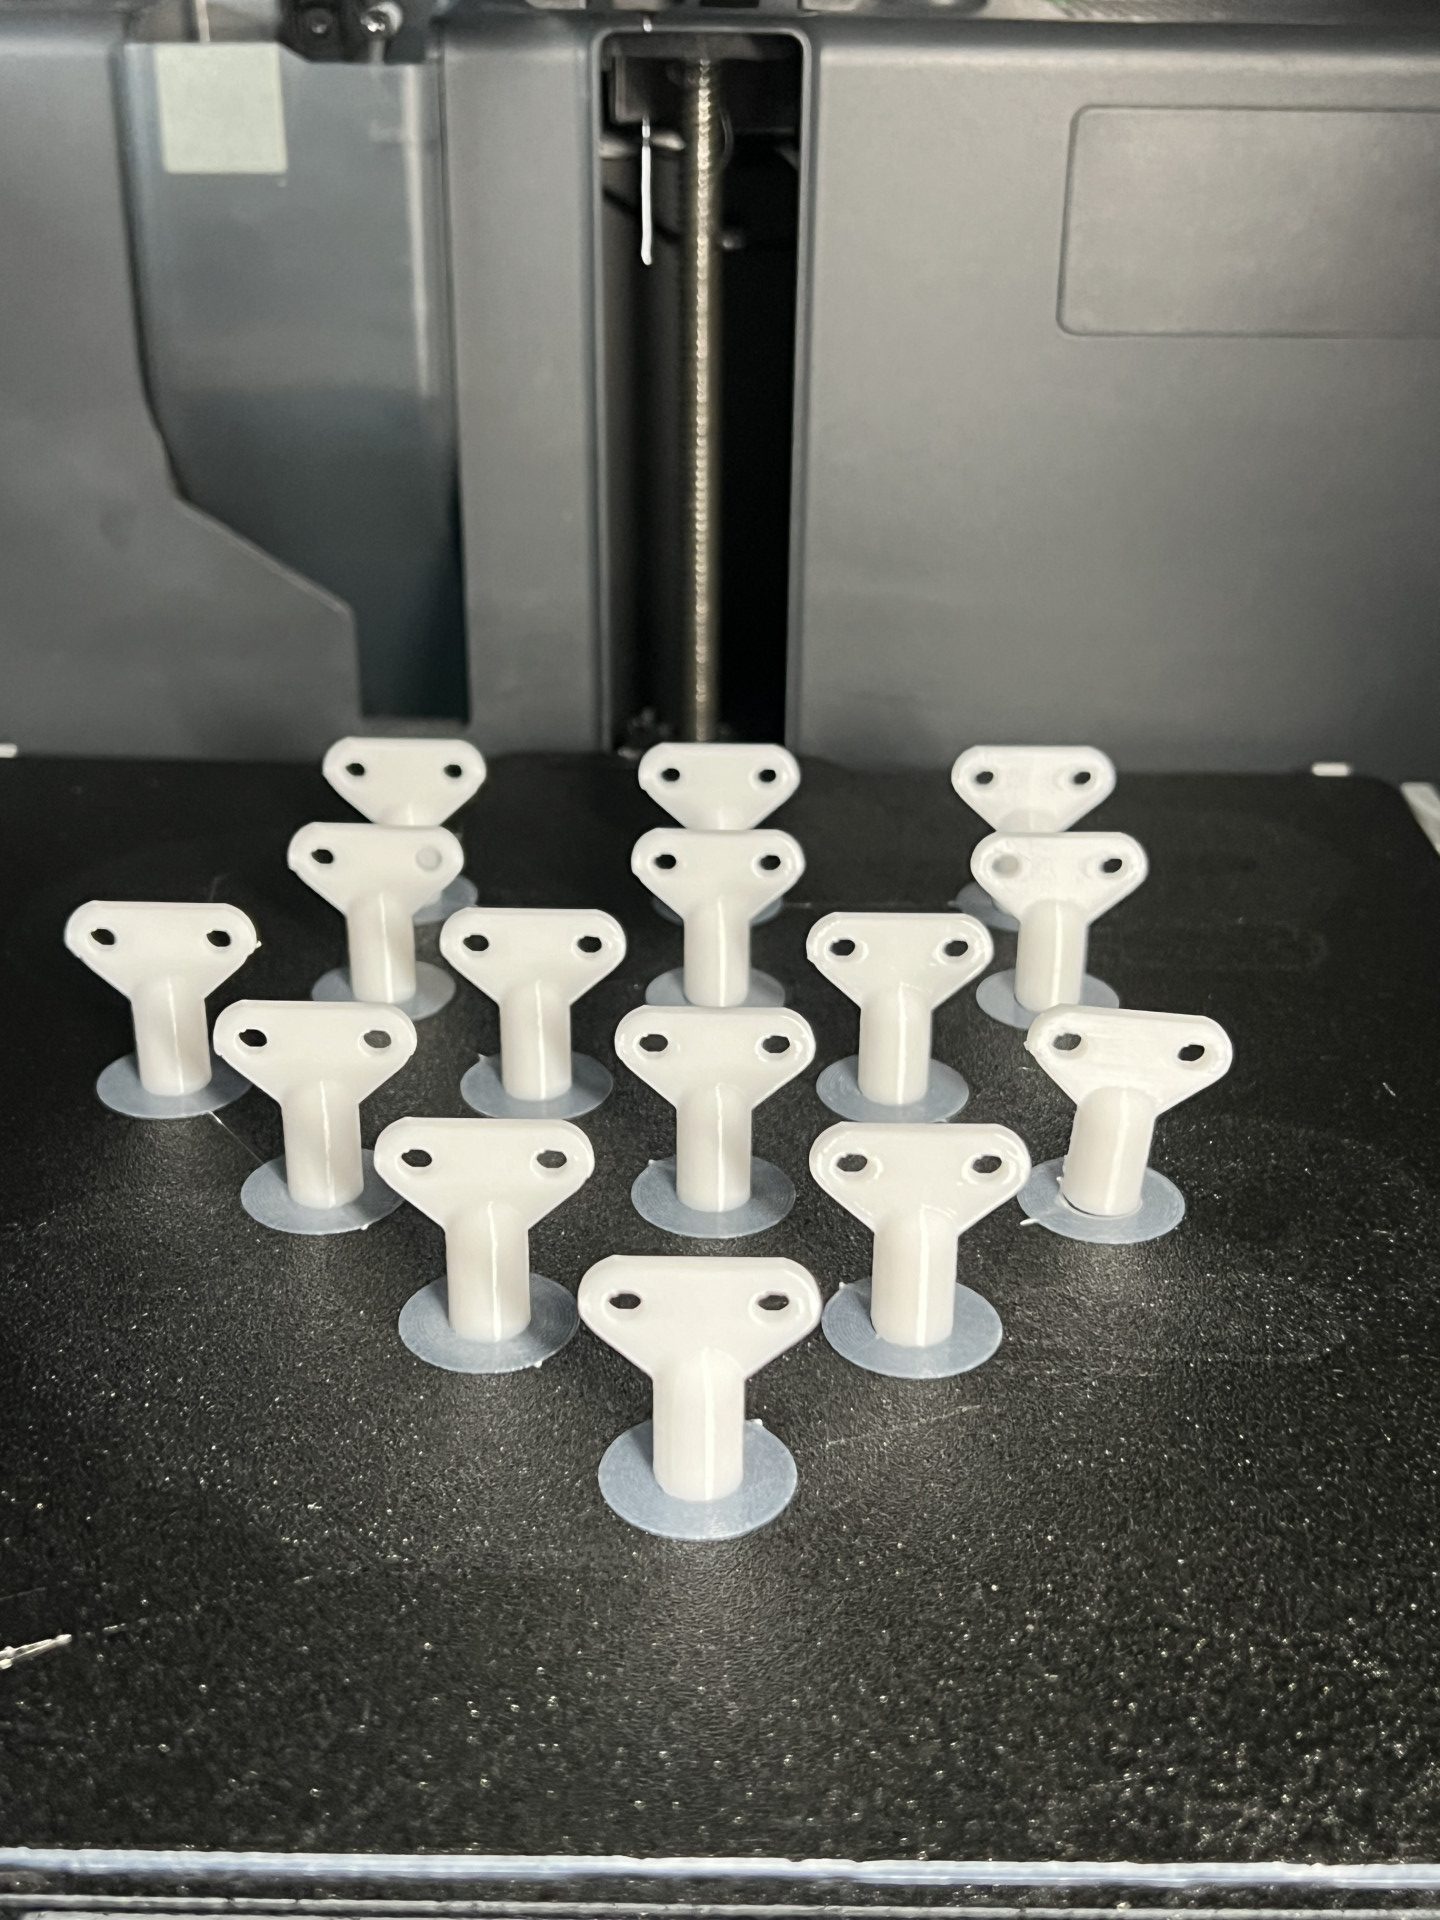 Radiator keys printed in white PETG 0.2mm @ 0.2mm resolution